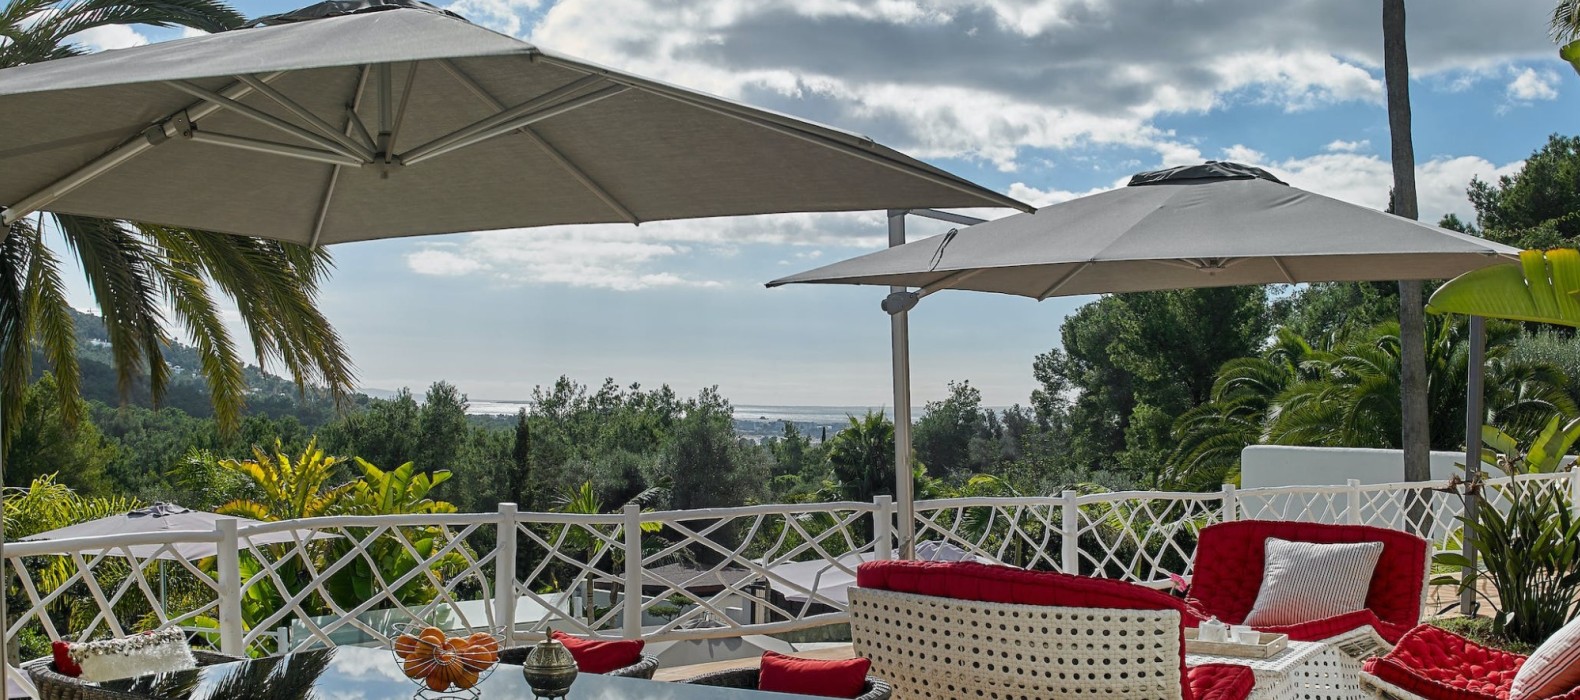 Exterior dining area of Villa Lusona in Ibiza